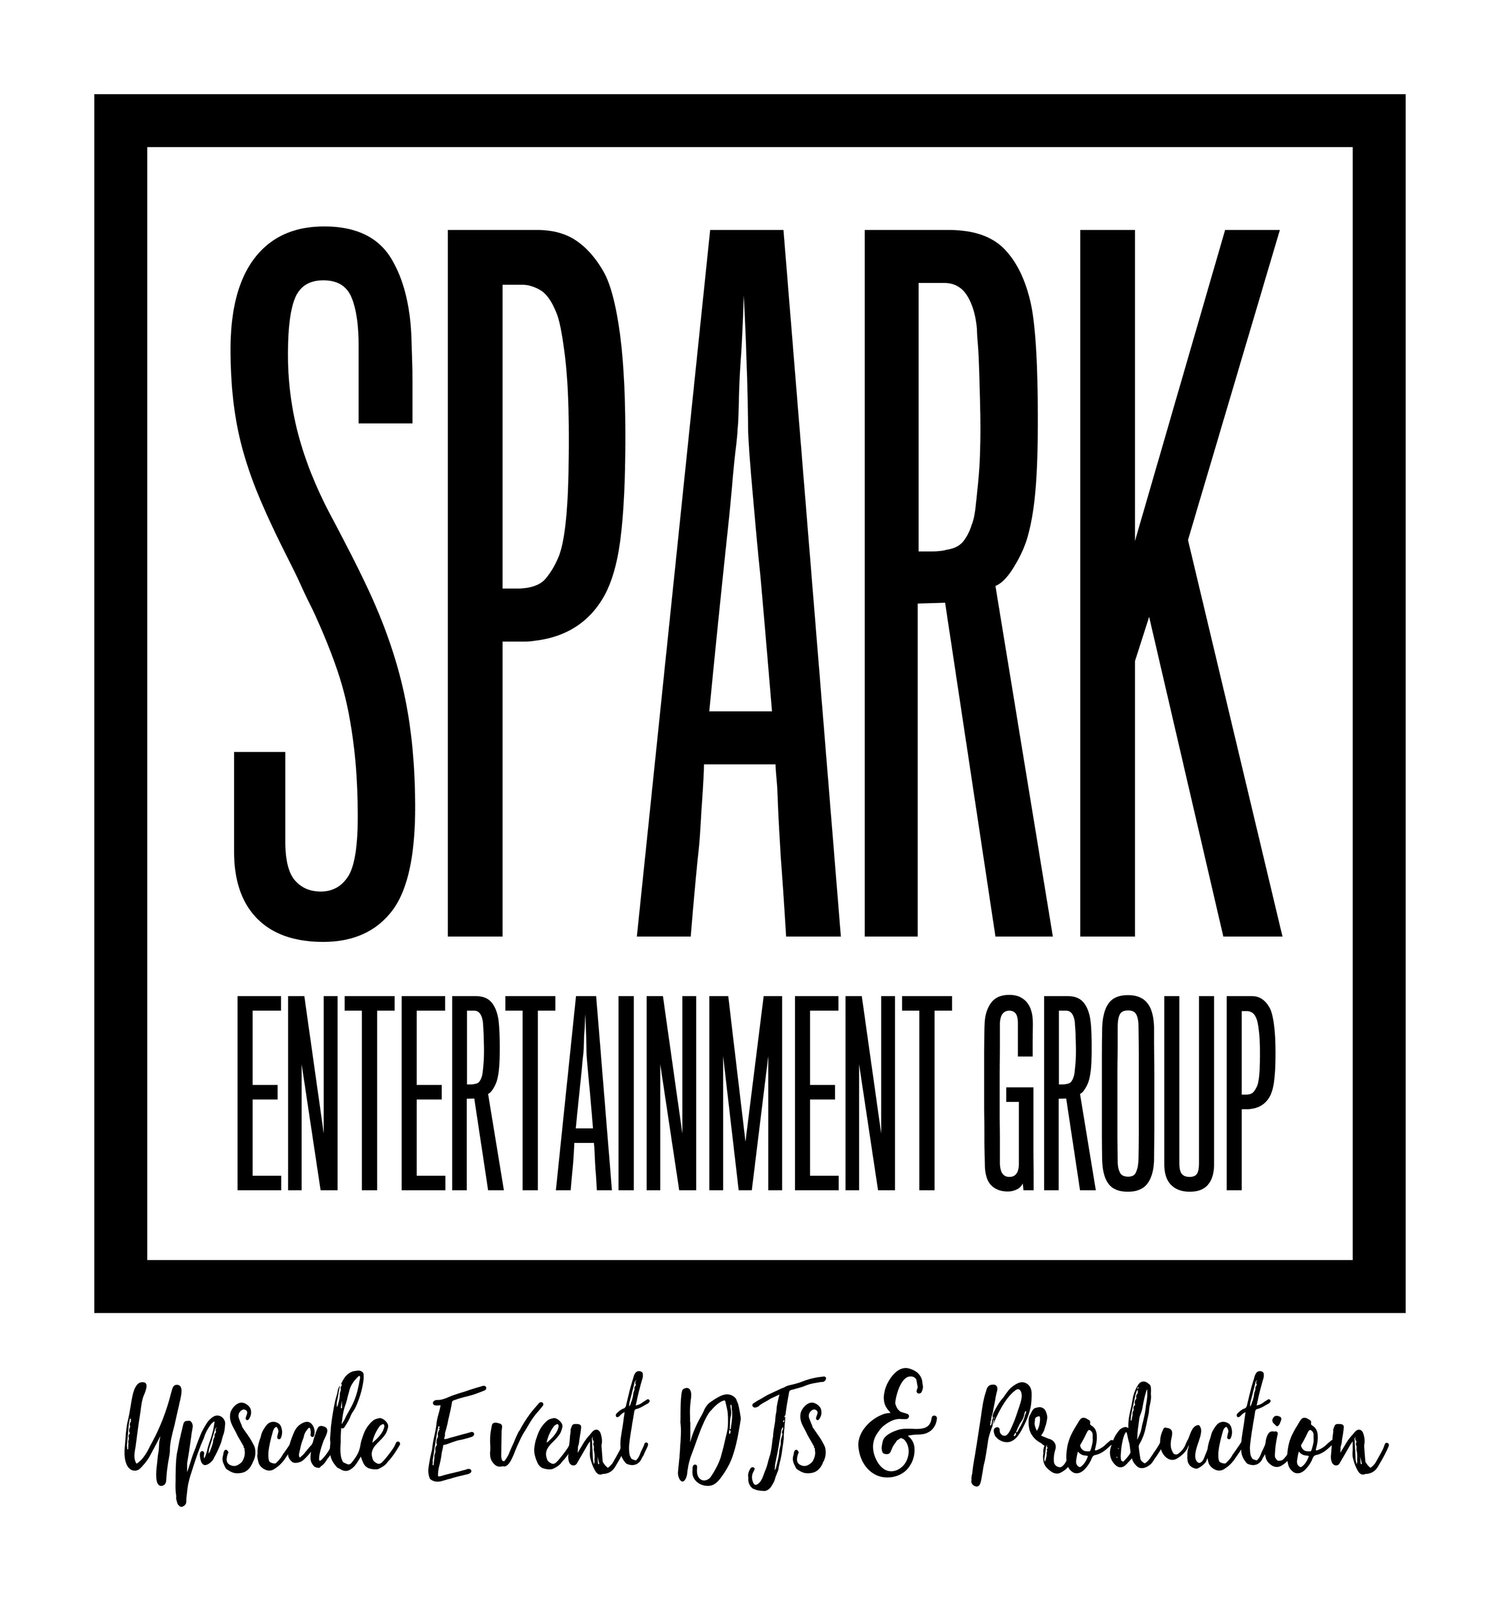     Spark Entertainment Group - Upscale Corporate DJ, Wedding DJ and Private Event DJ Entertainment